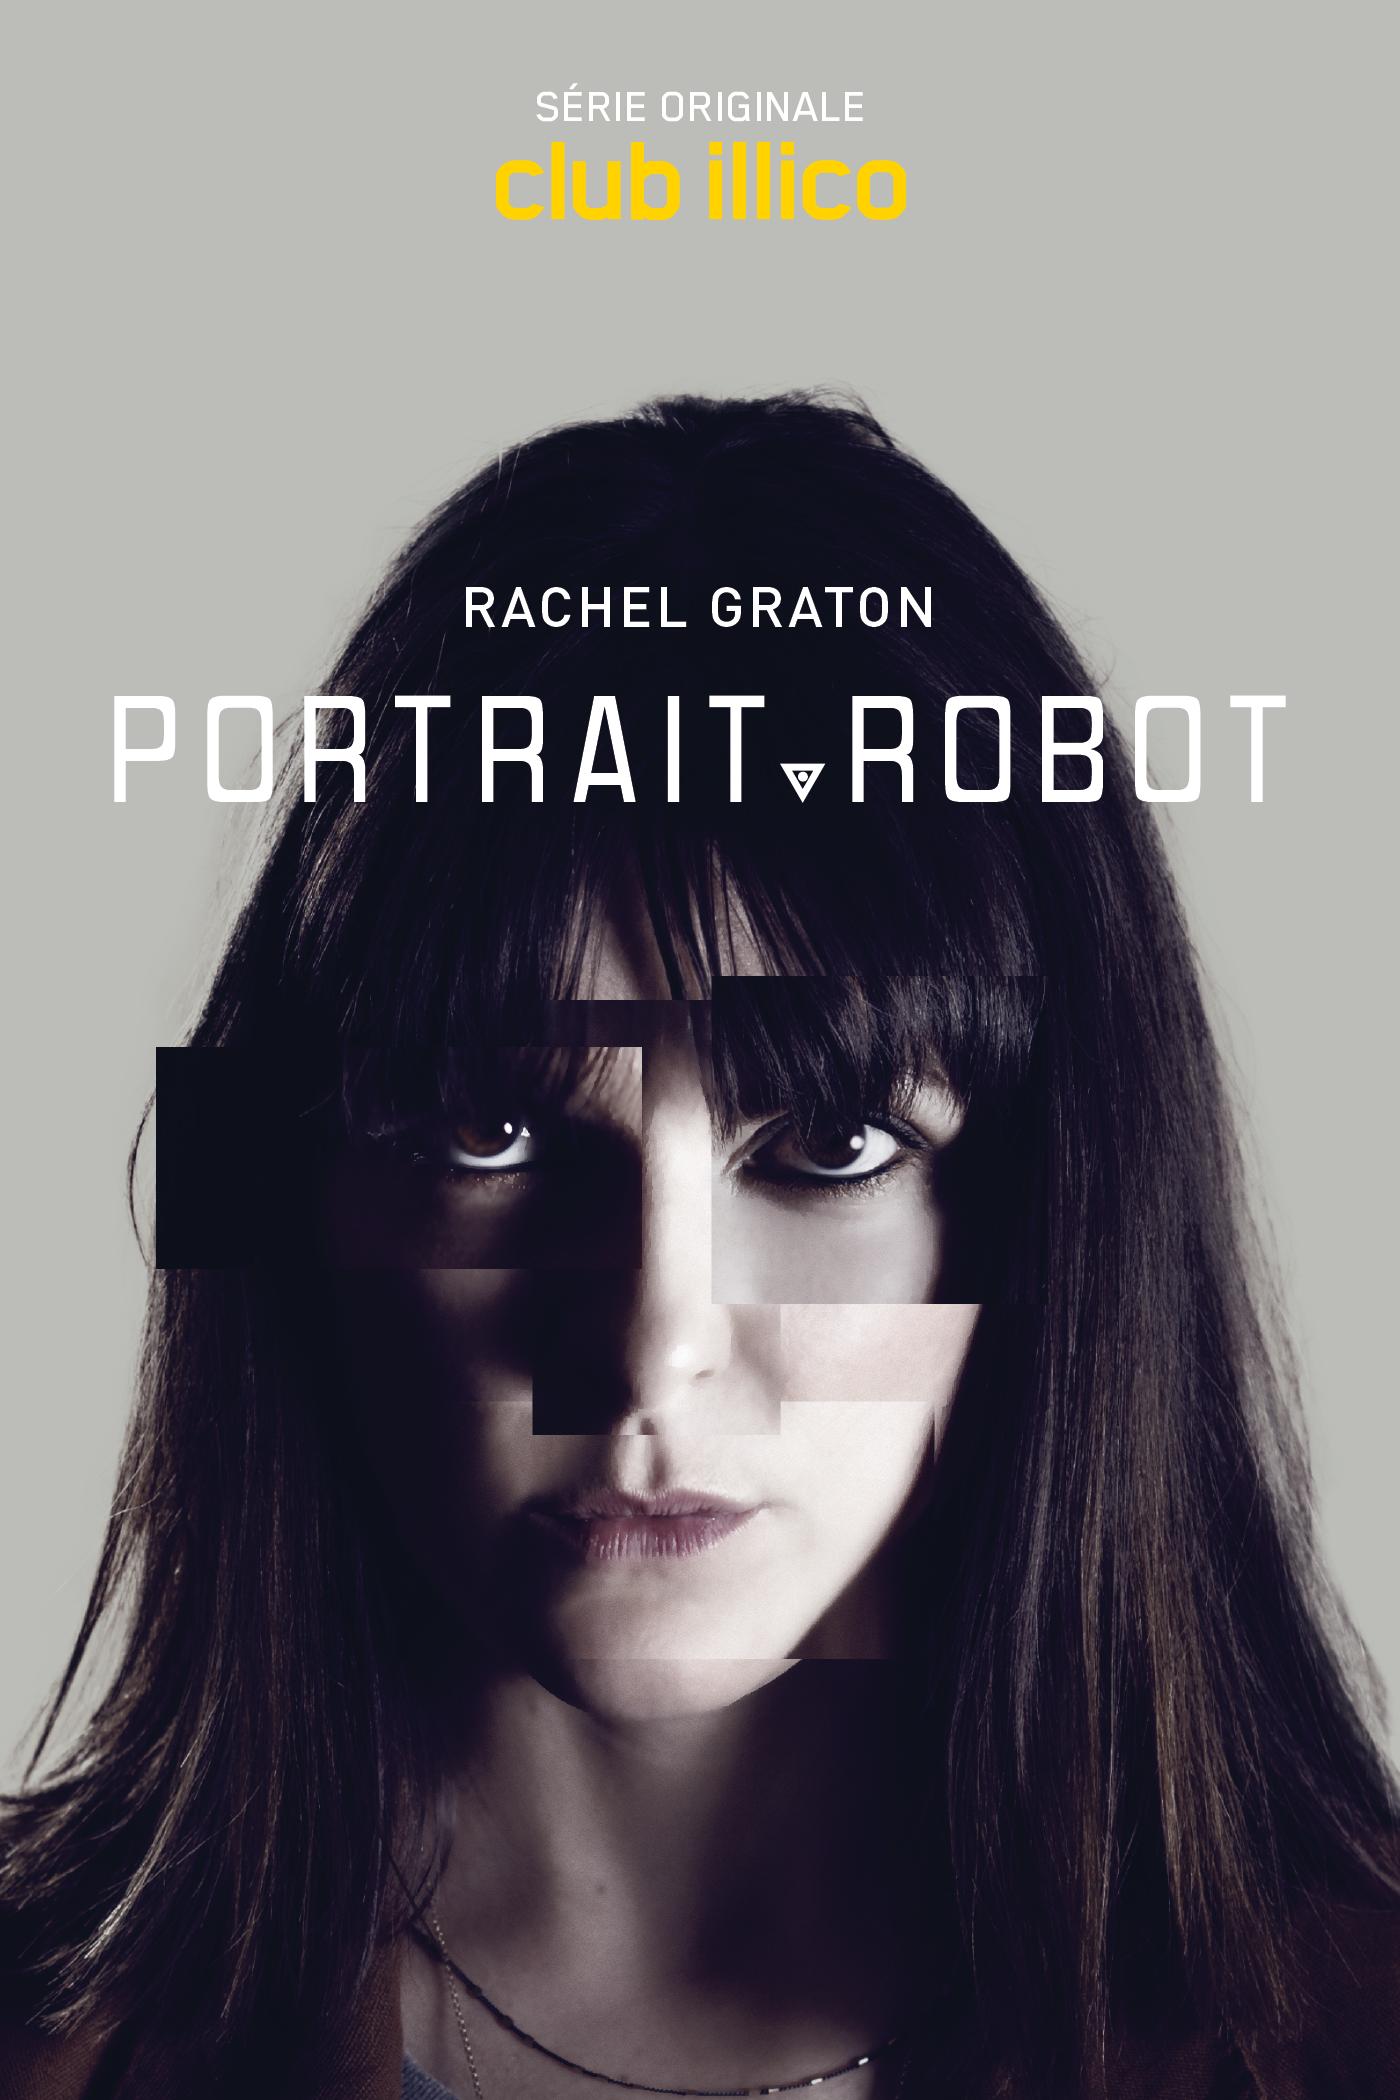 The Sketch Artist (Portrait - Robot)